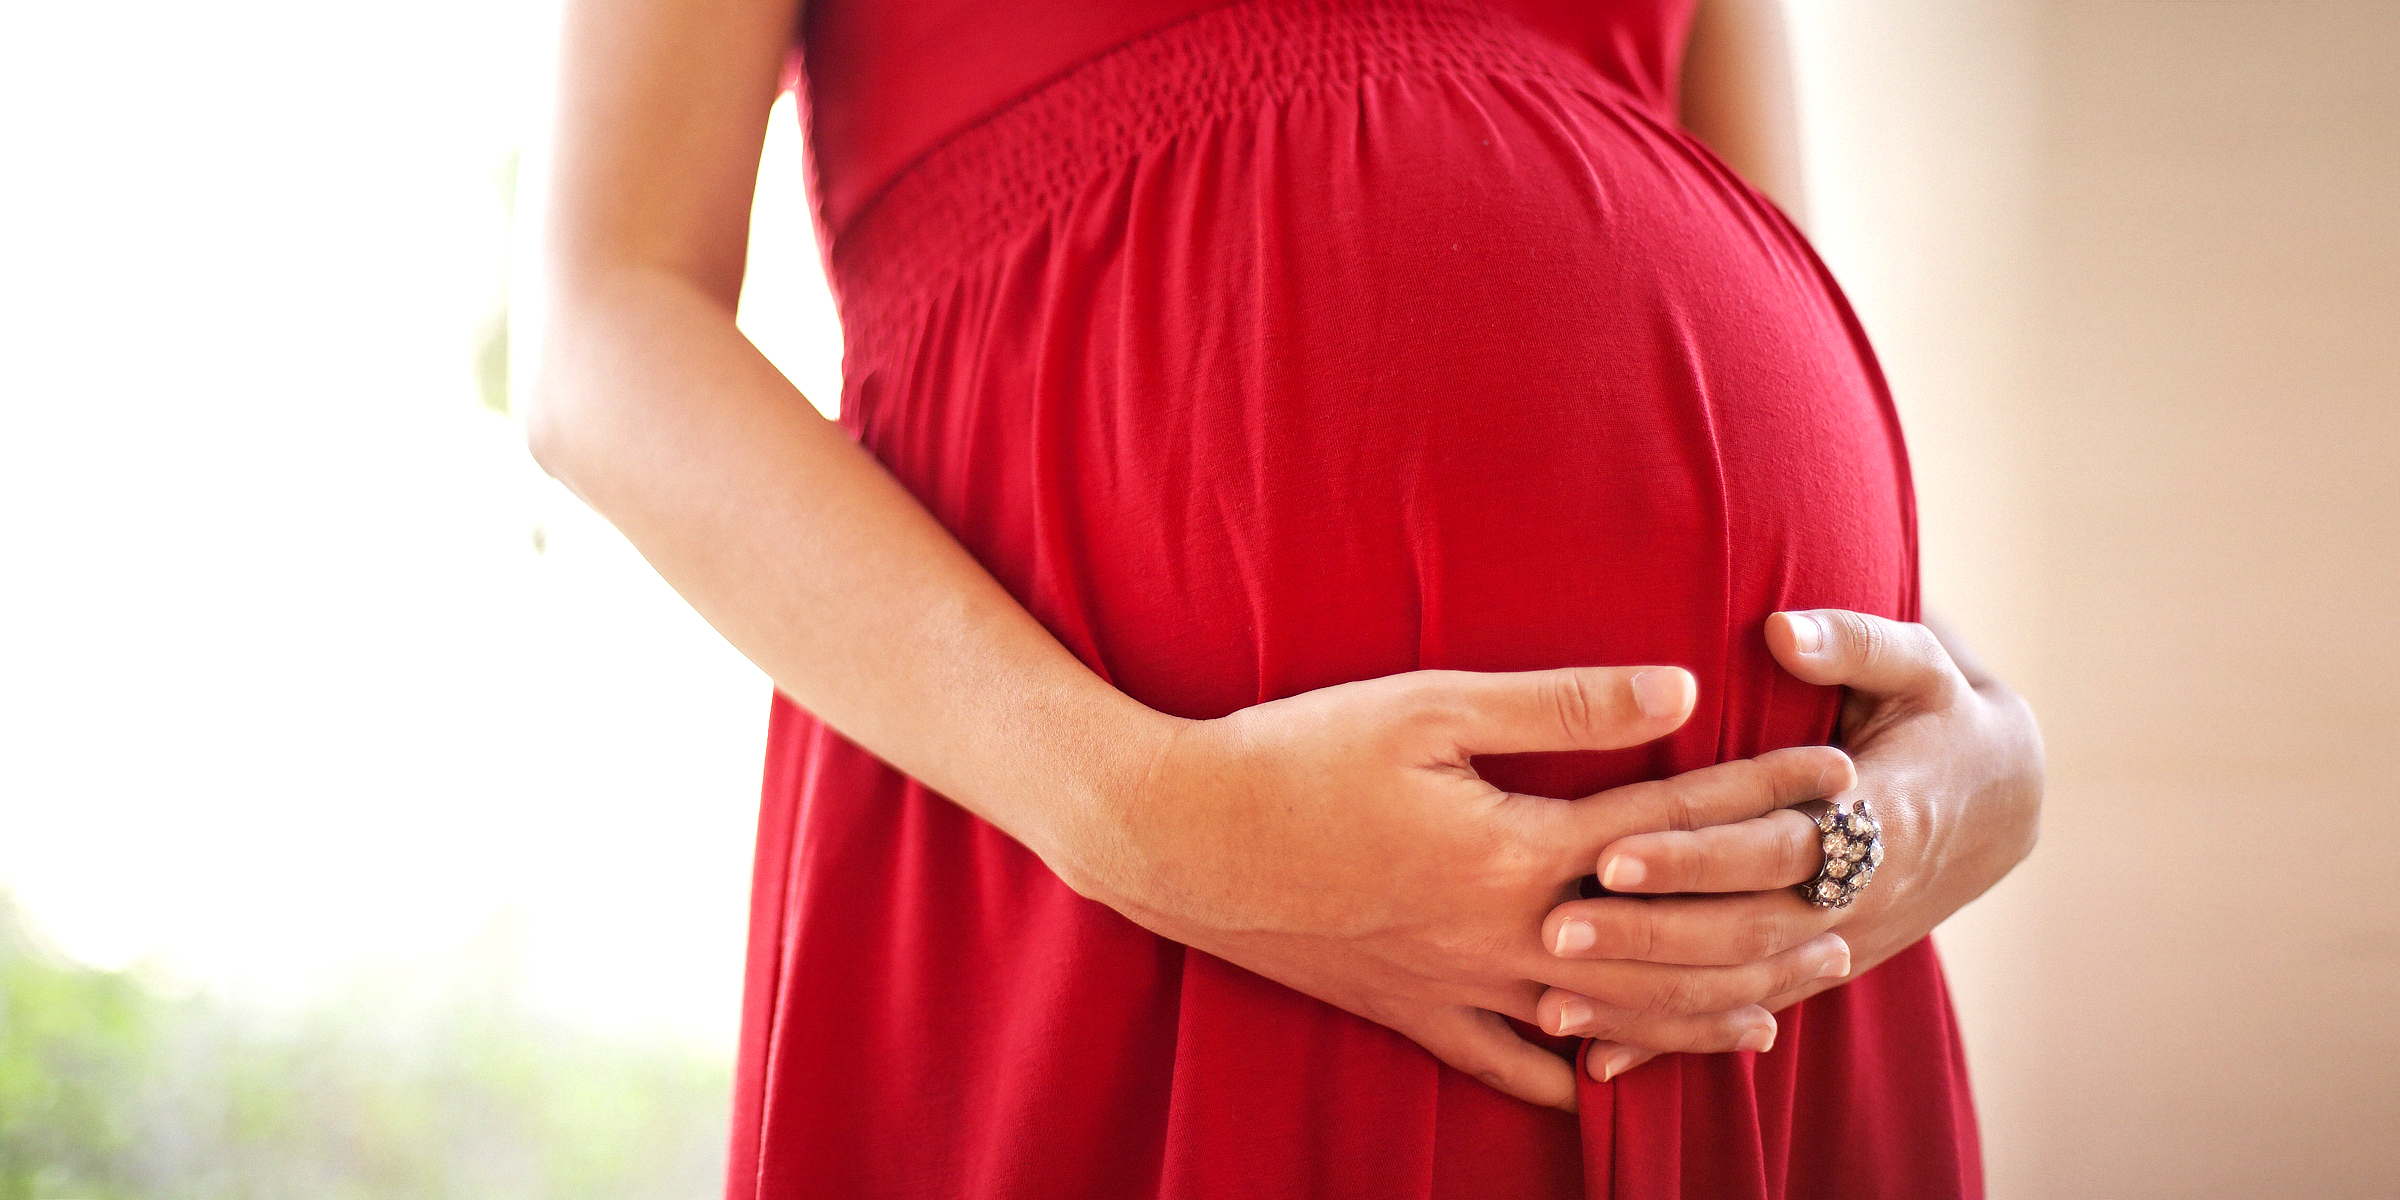 Mujer embarazada sujetándose la barriga | Foto: Shutterstock